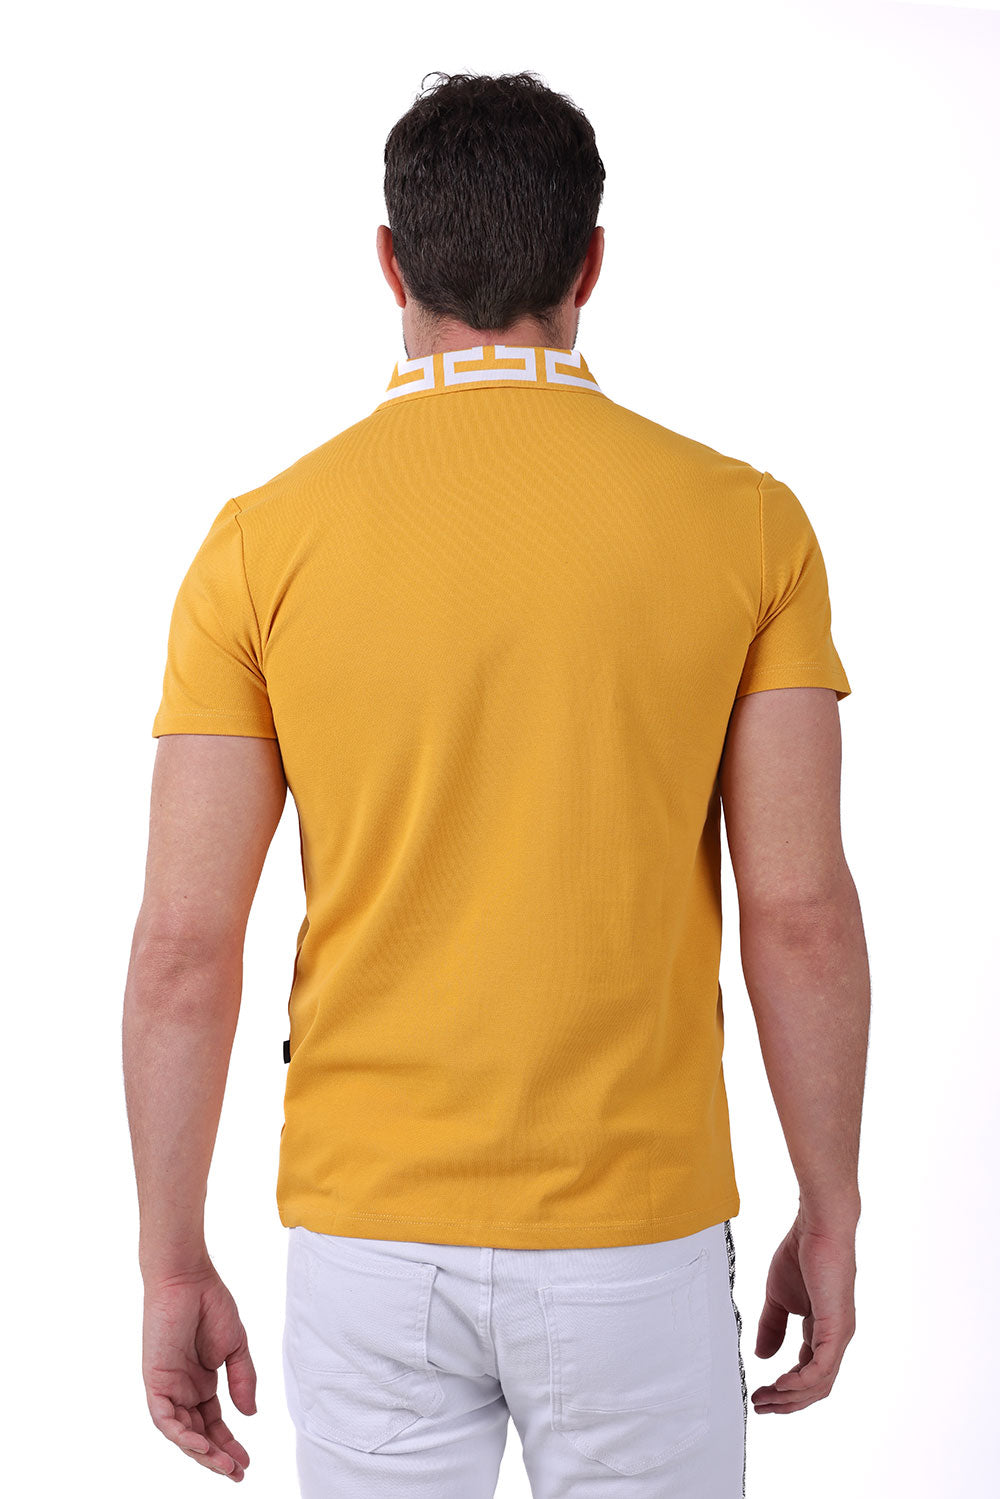 Barabas Men's Greek Key Printed Pattern Short Sleeve Shirts PS121 Mustard